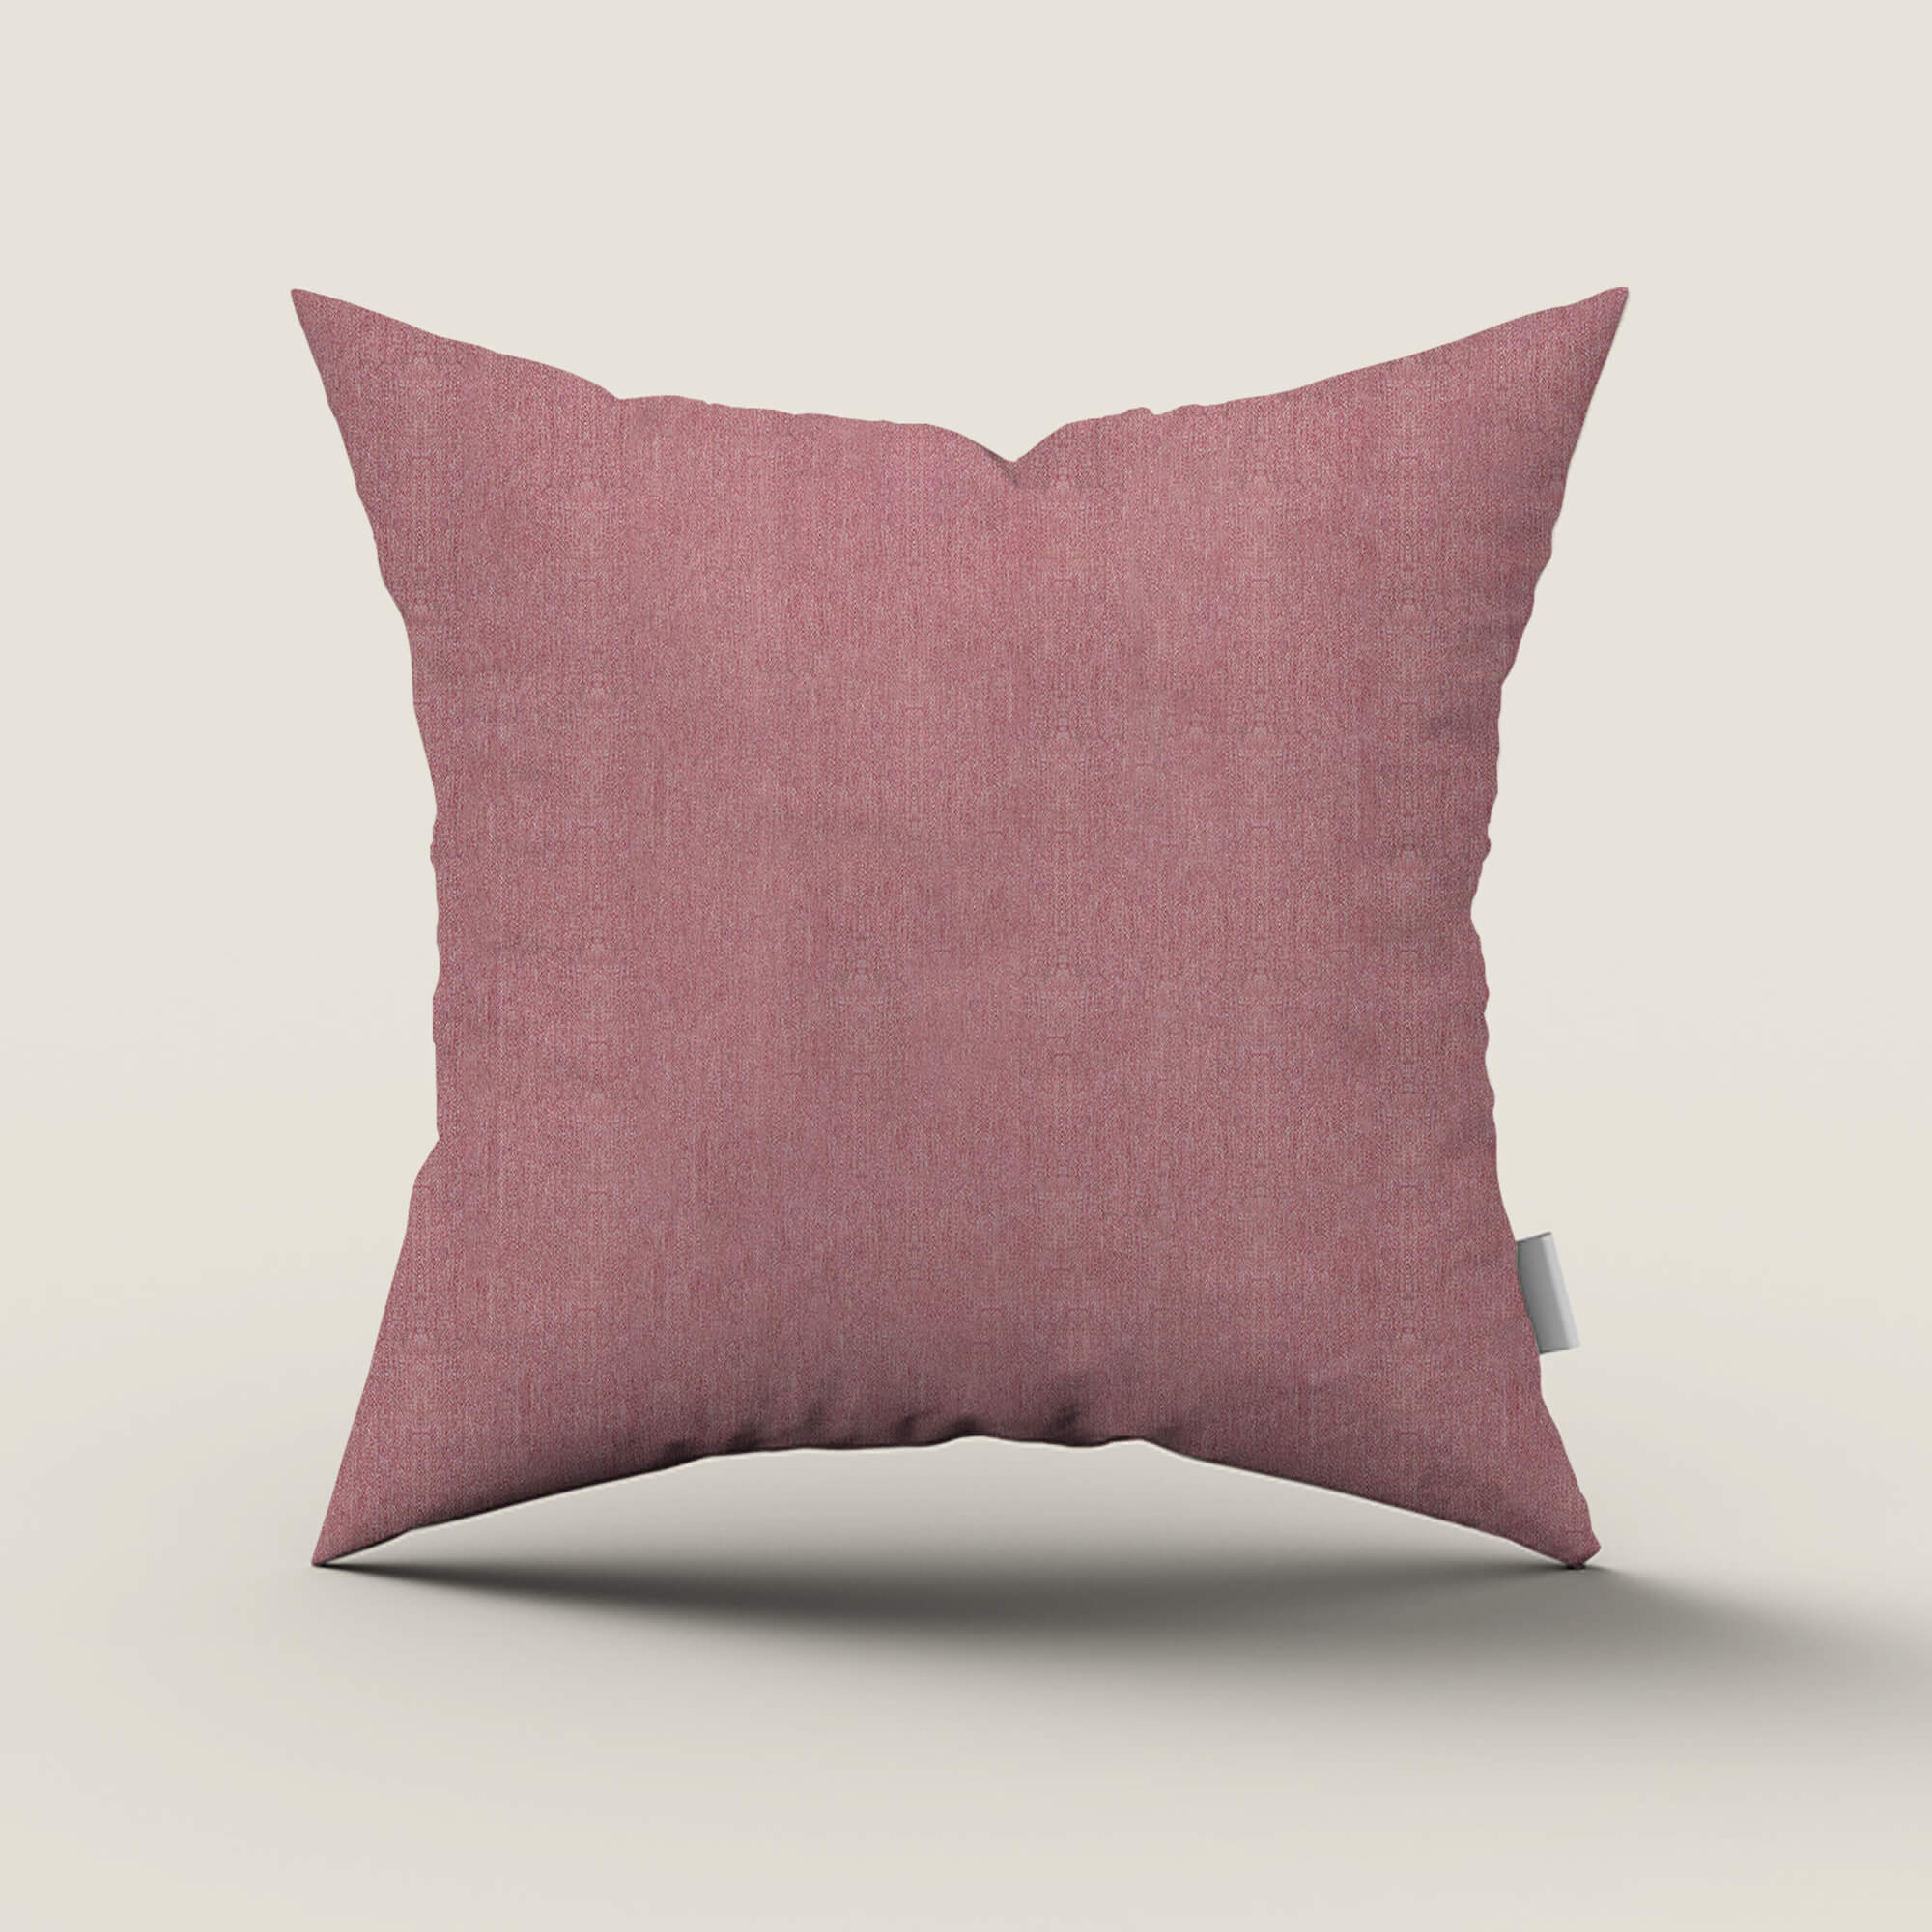 PENGI Waterproof Outdoor Pillow Case 1 Pcs - Mix Powder Pink